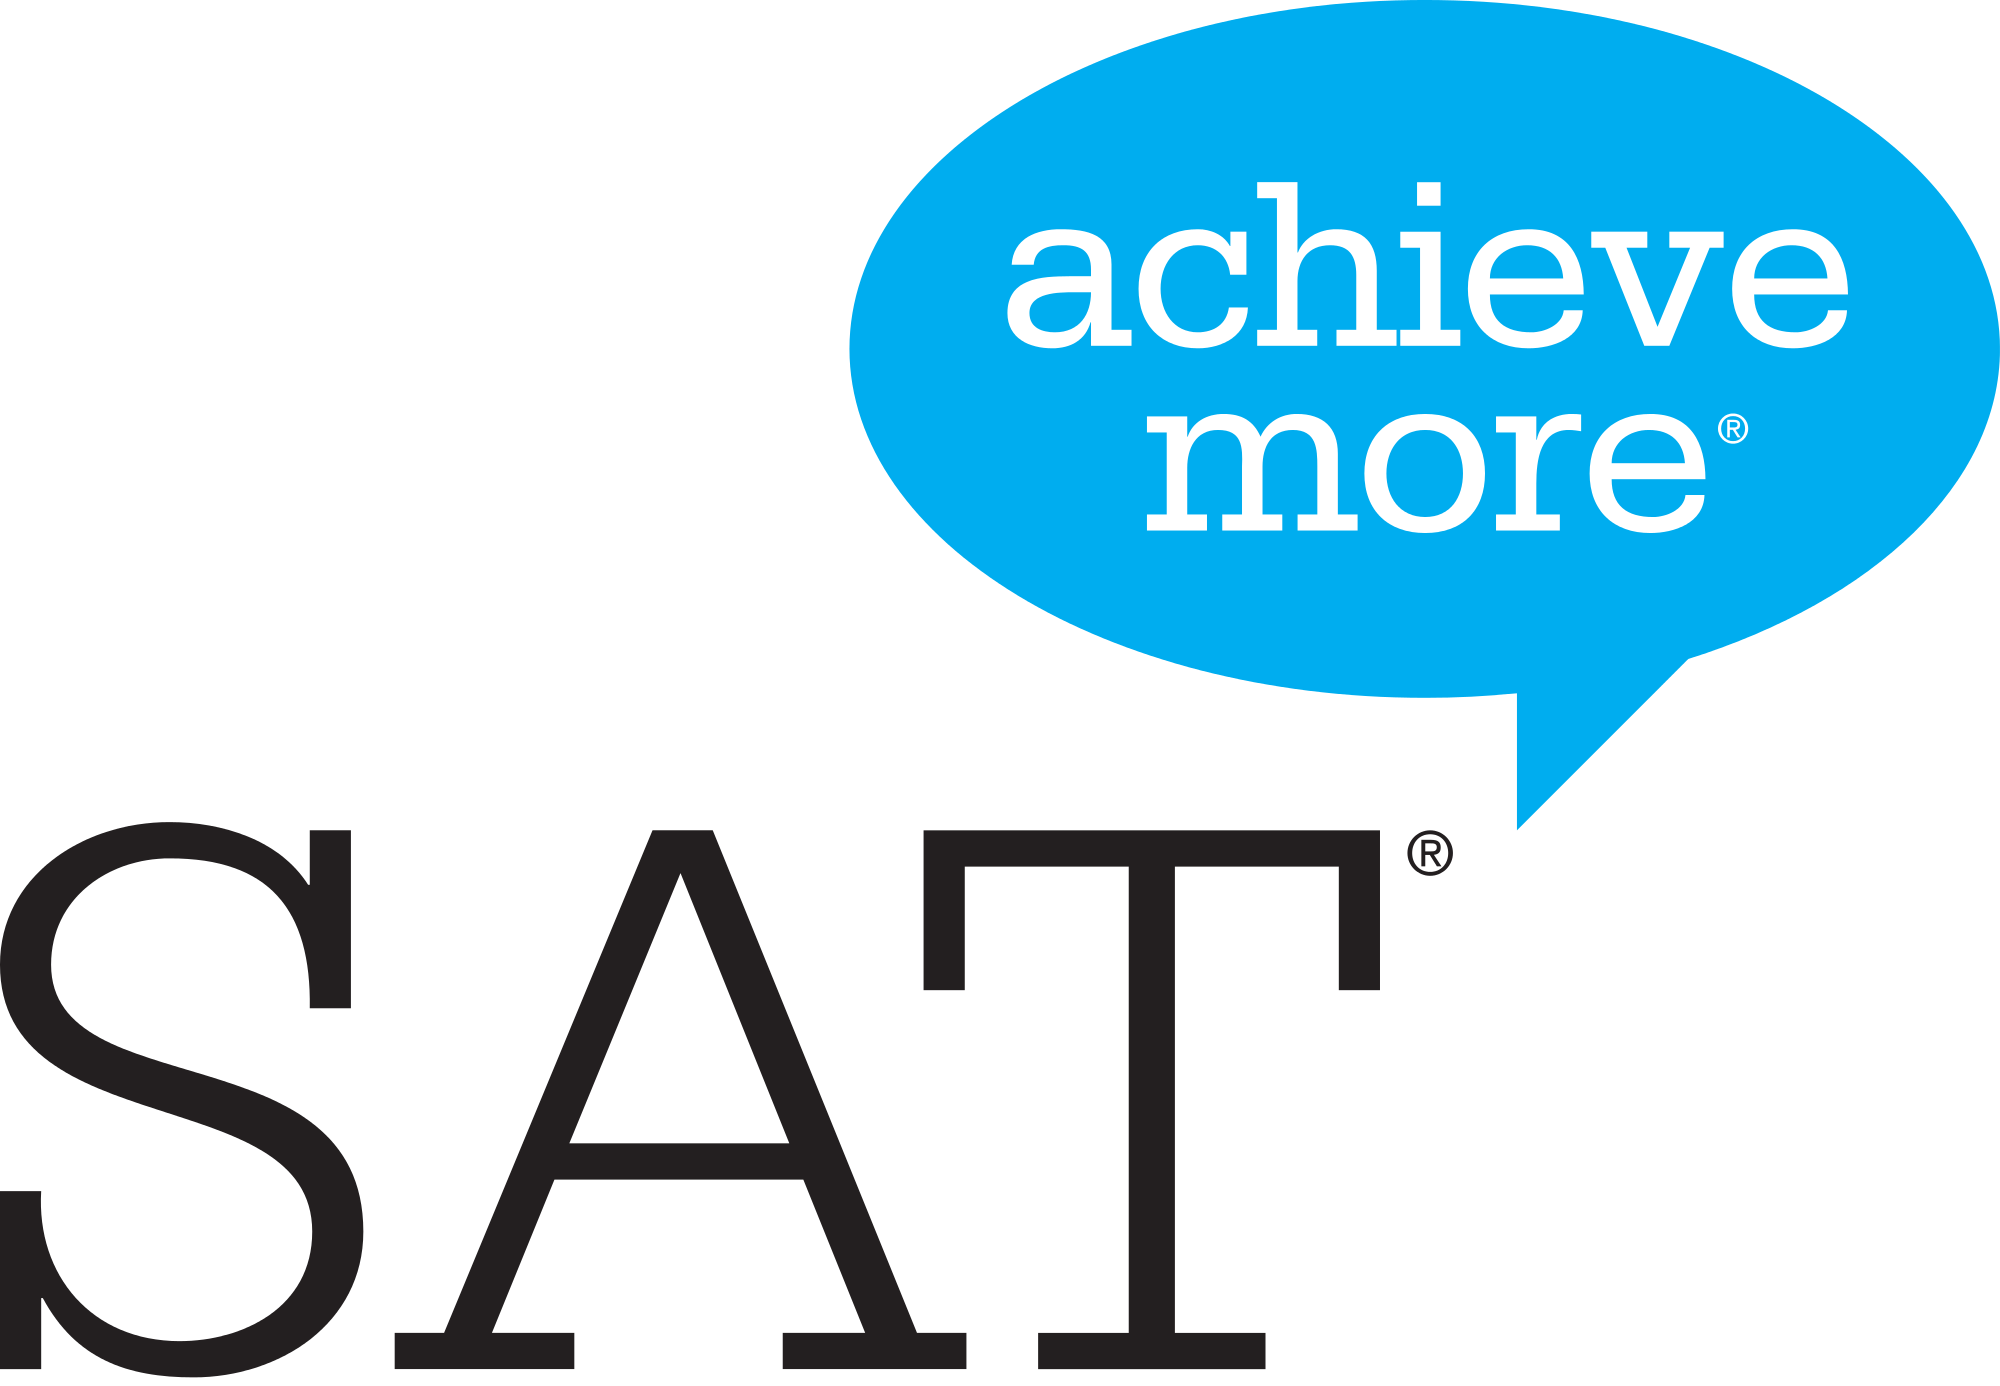 The new SAT logo and slogan. 